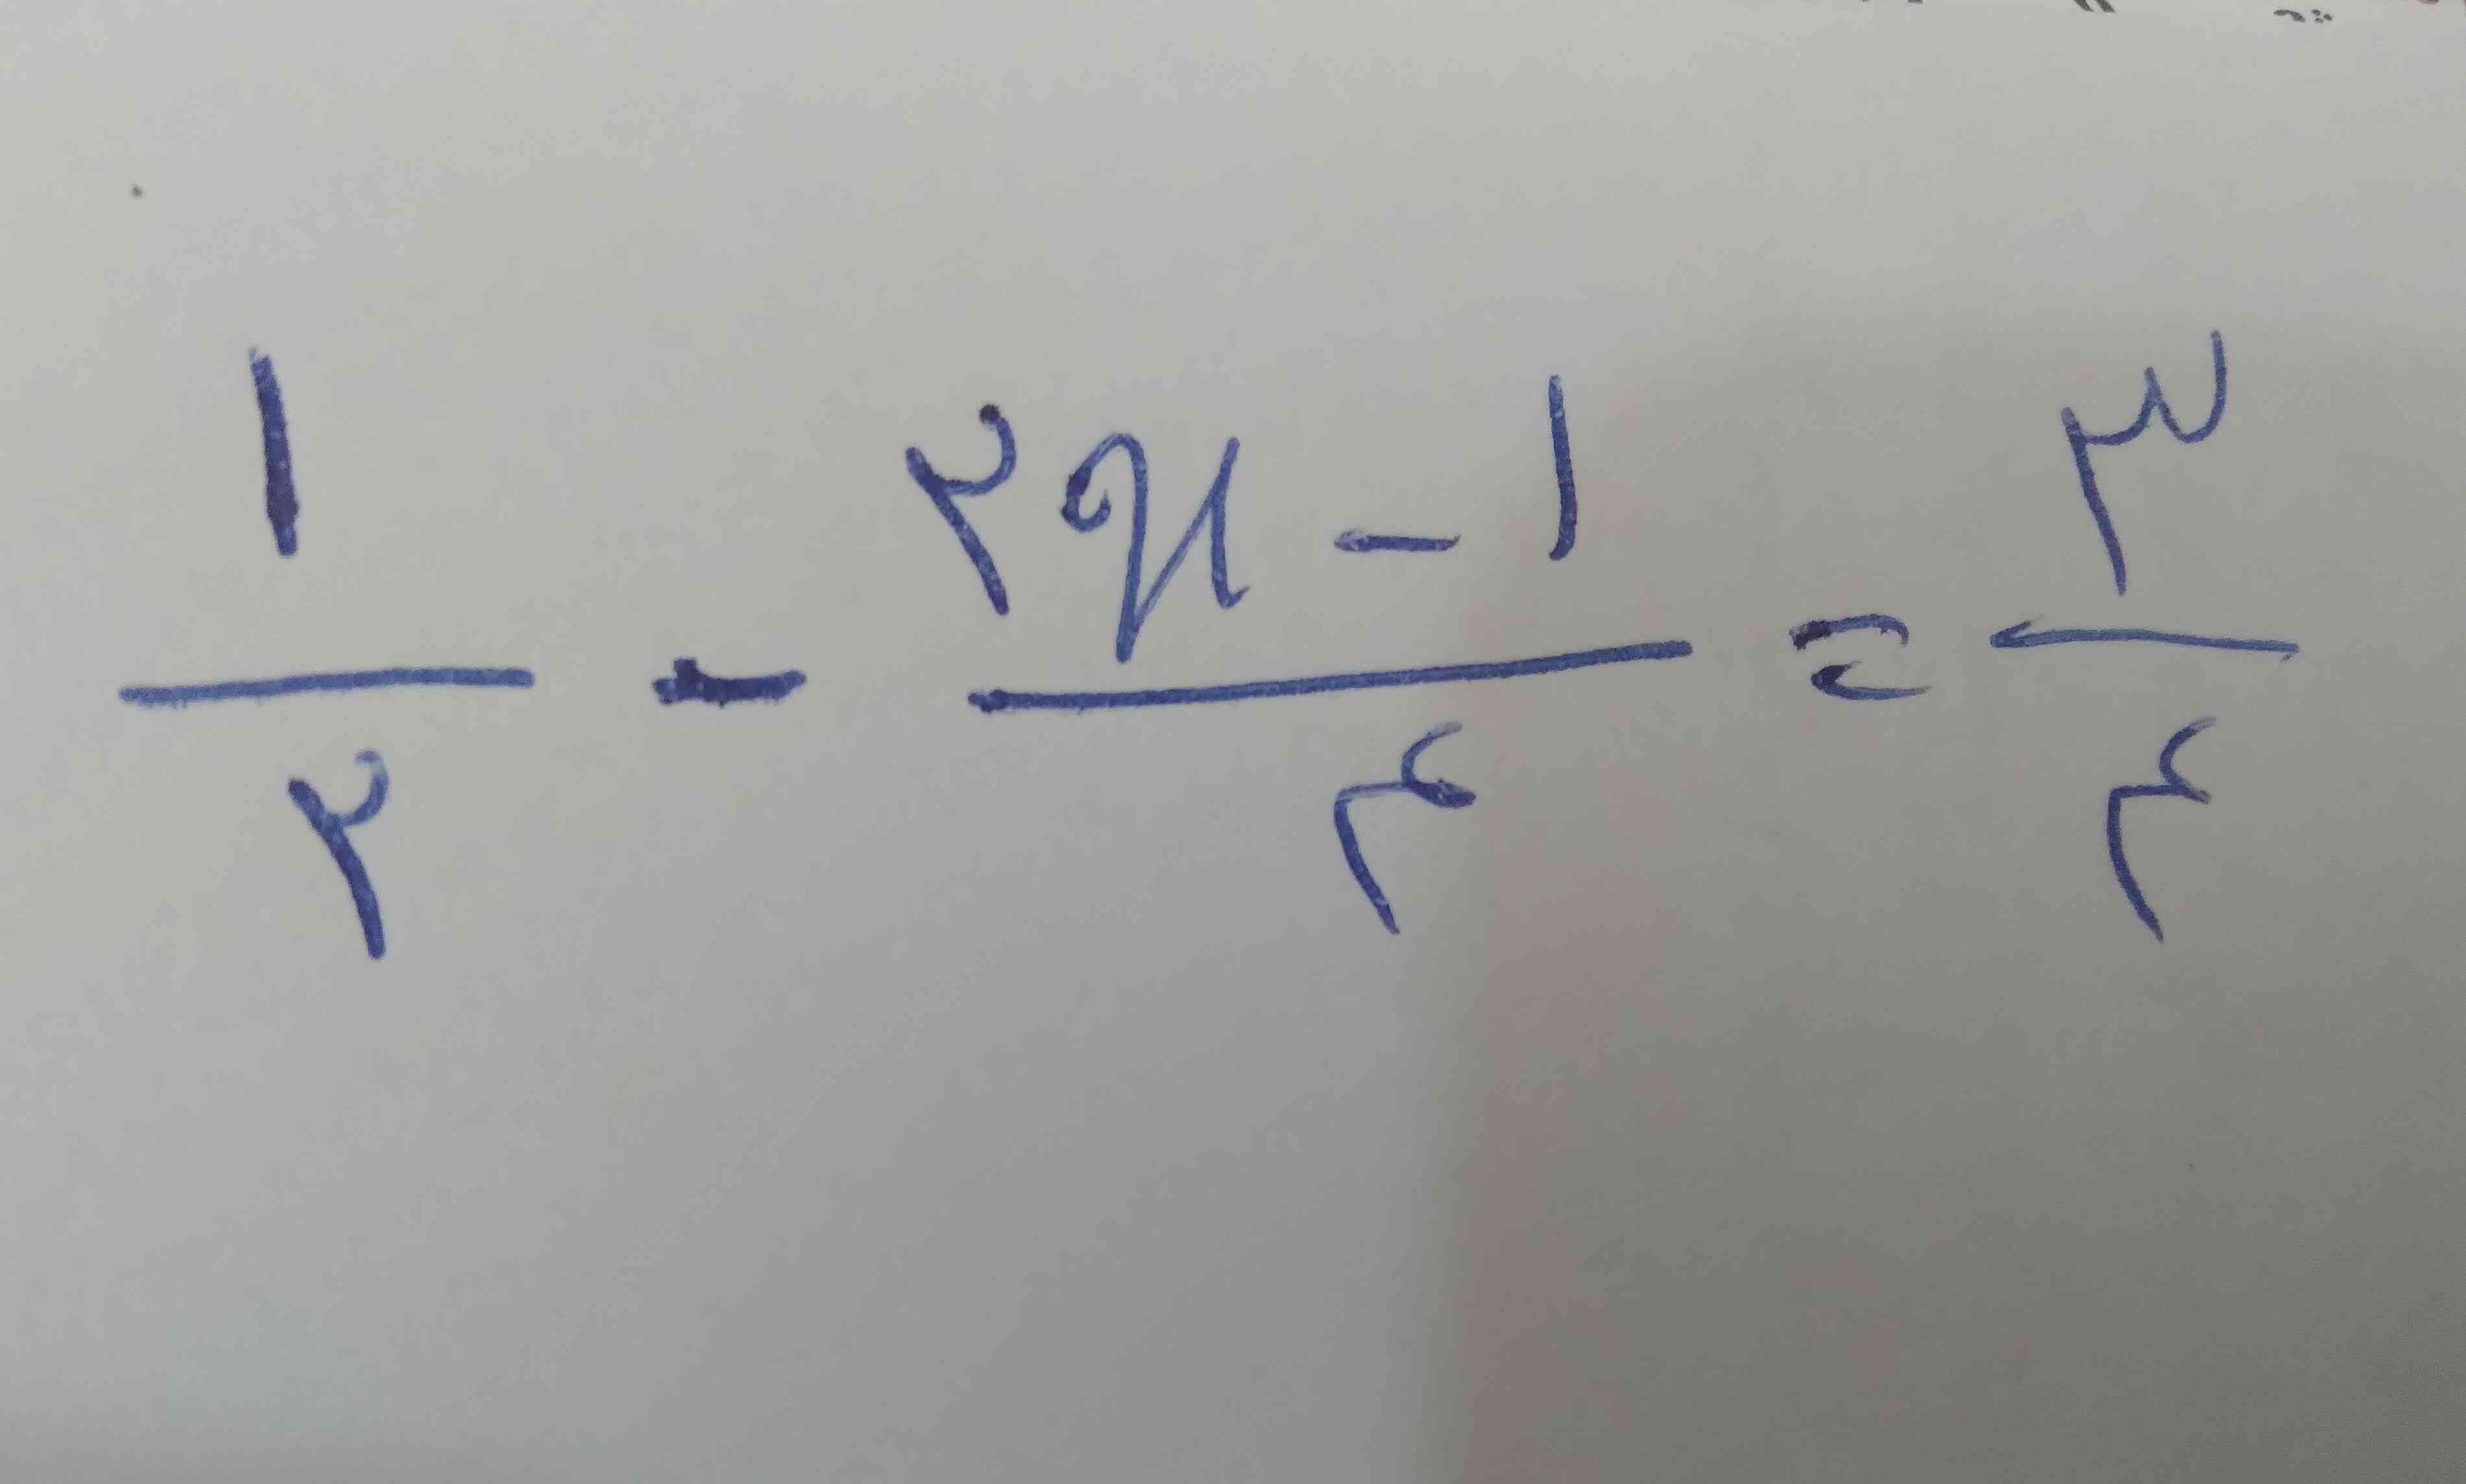 ببخشید کسی میتونه بگه چرا جواب این معادله میشه صفر؟
تاججججج میدمممم
